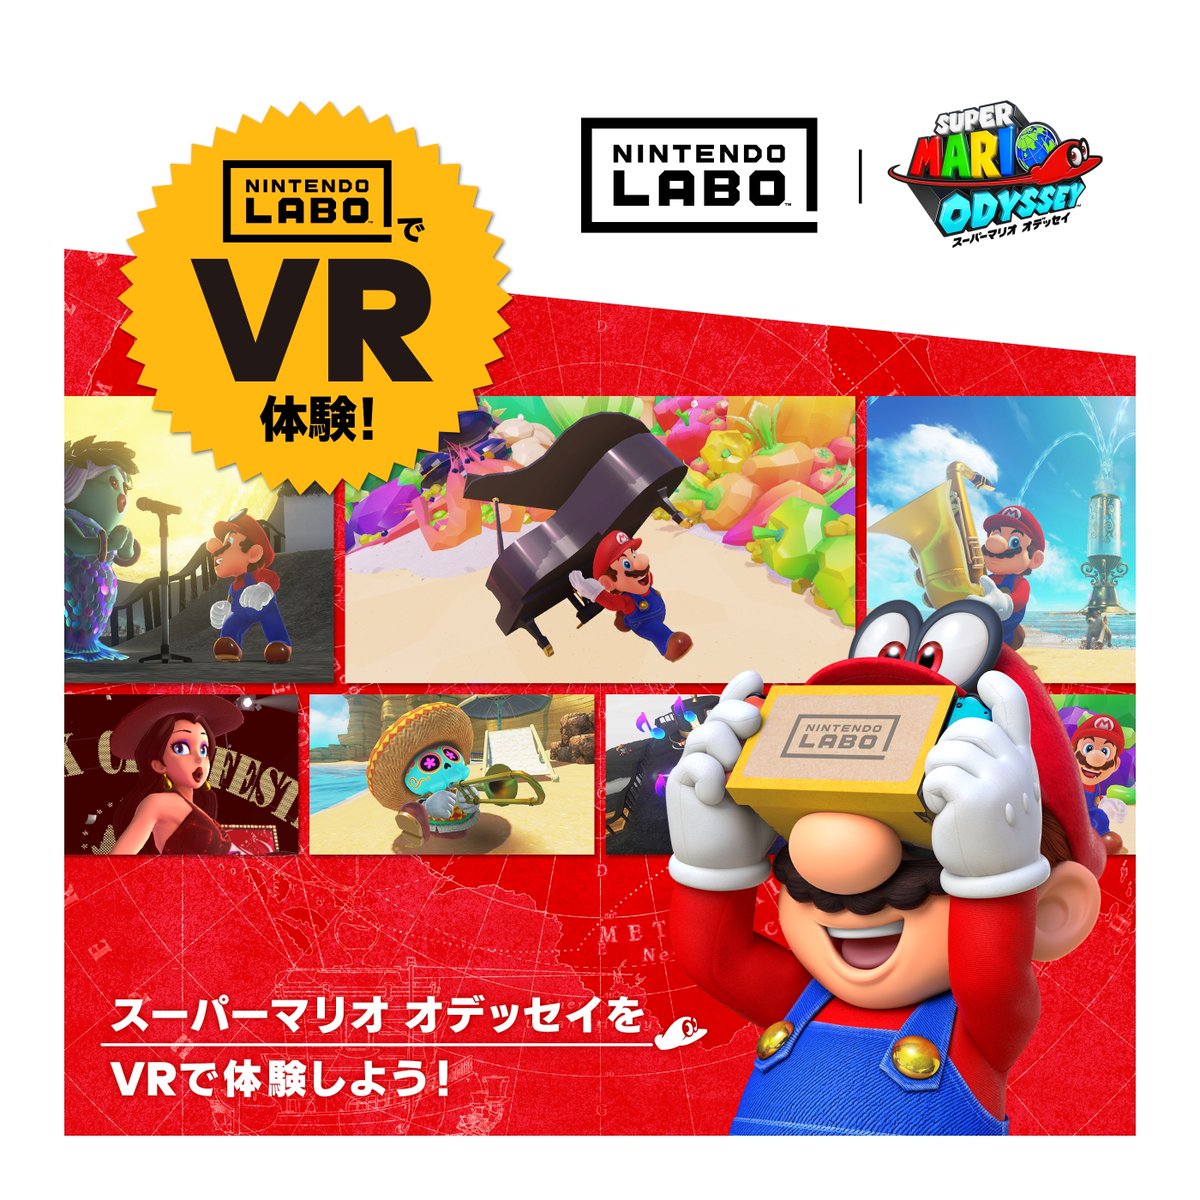 Nintendo Labo VR Kit support 